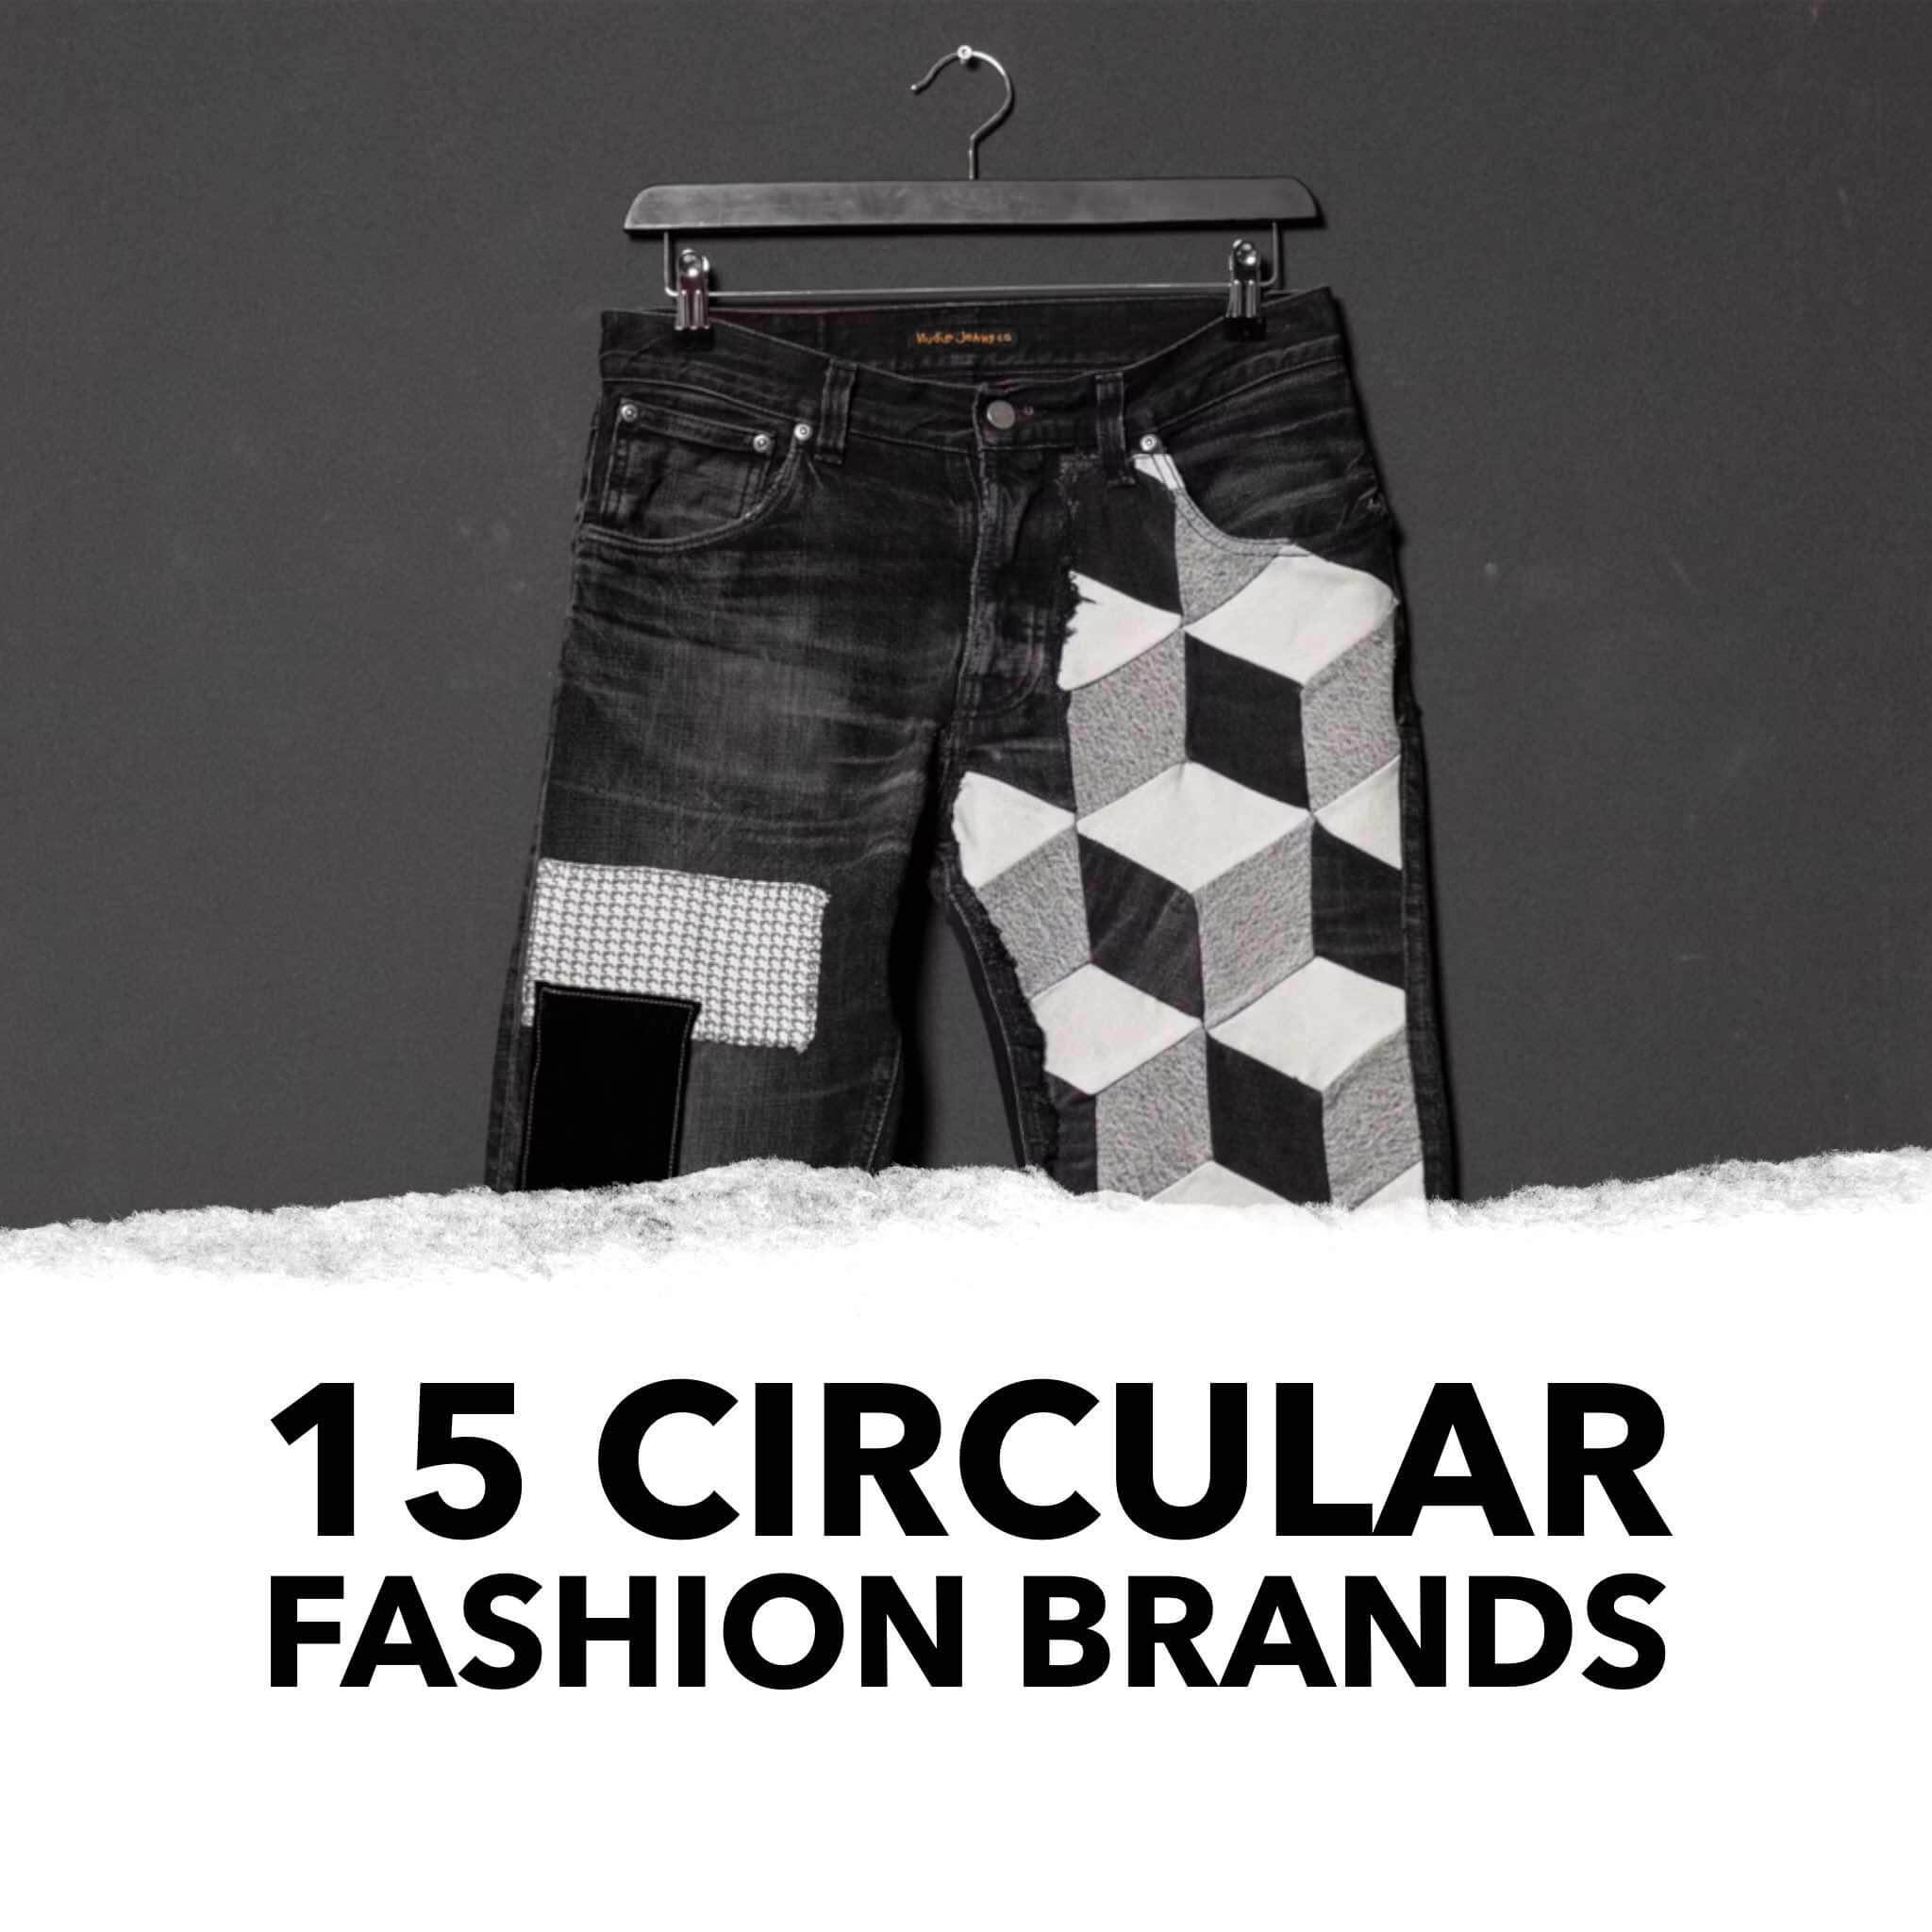 15 Circular Fashion Brands